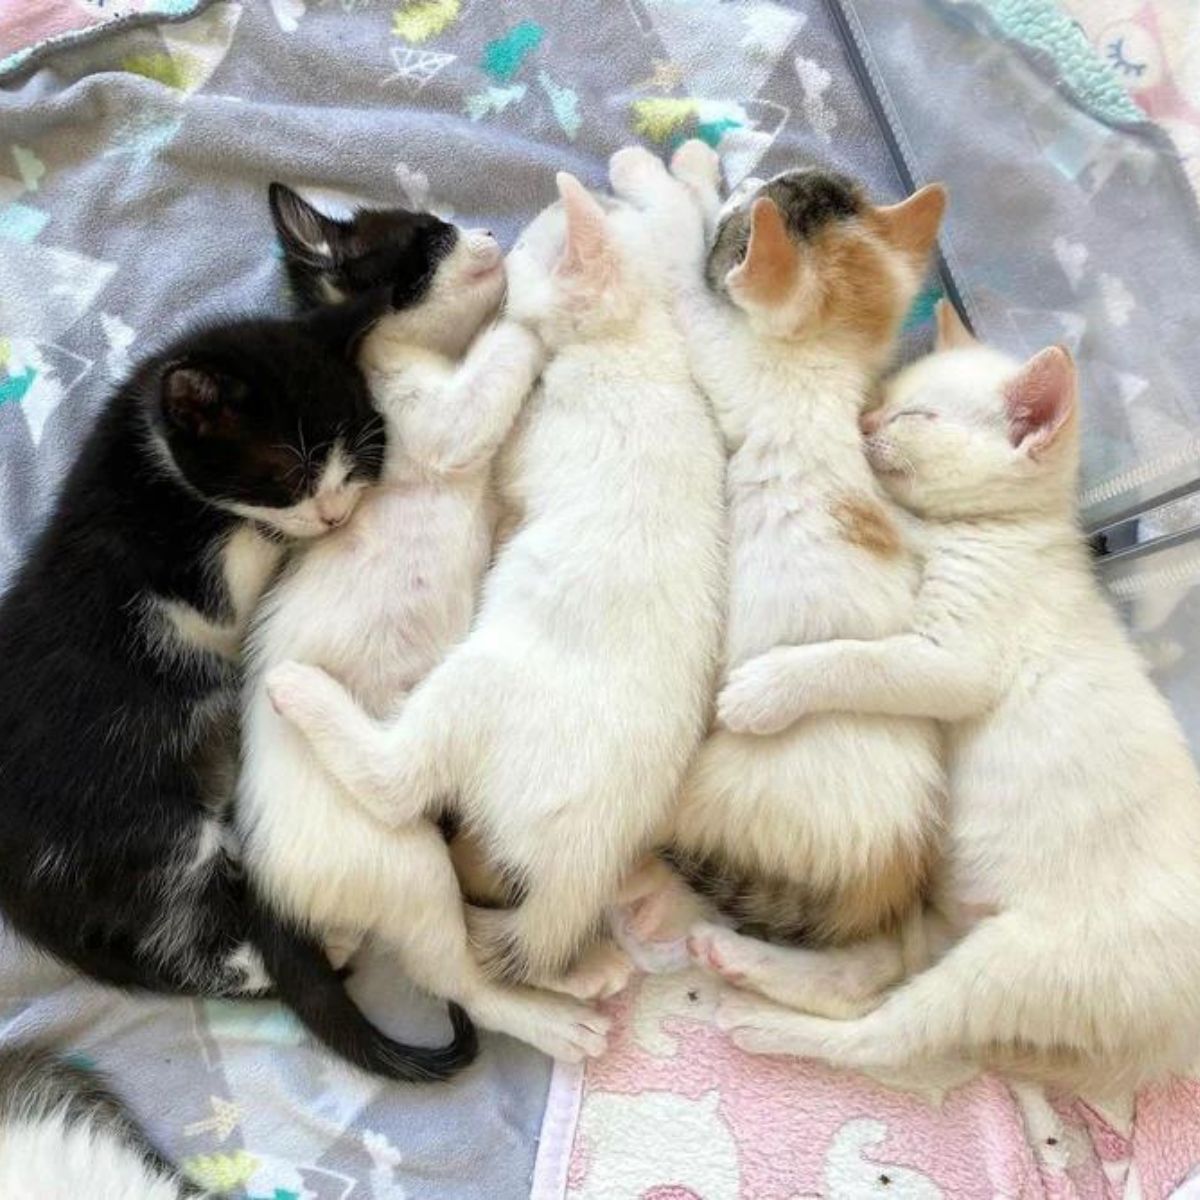 cute kittens sleeping together